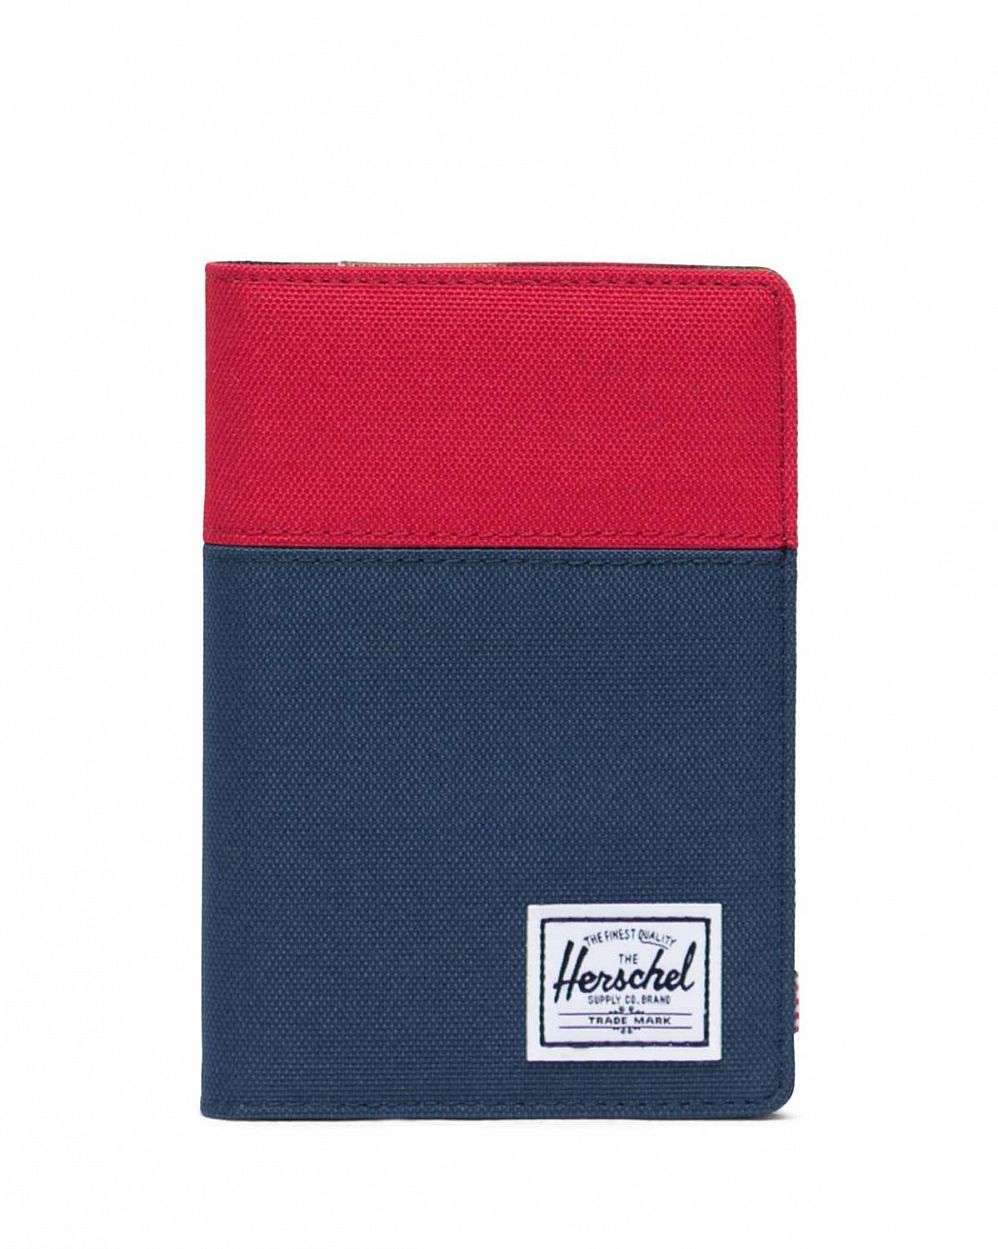 Обложка для паспорта Herschel Raynor Passport Holder RFID Red Navy Woodland отзывы